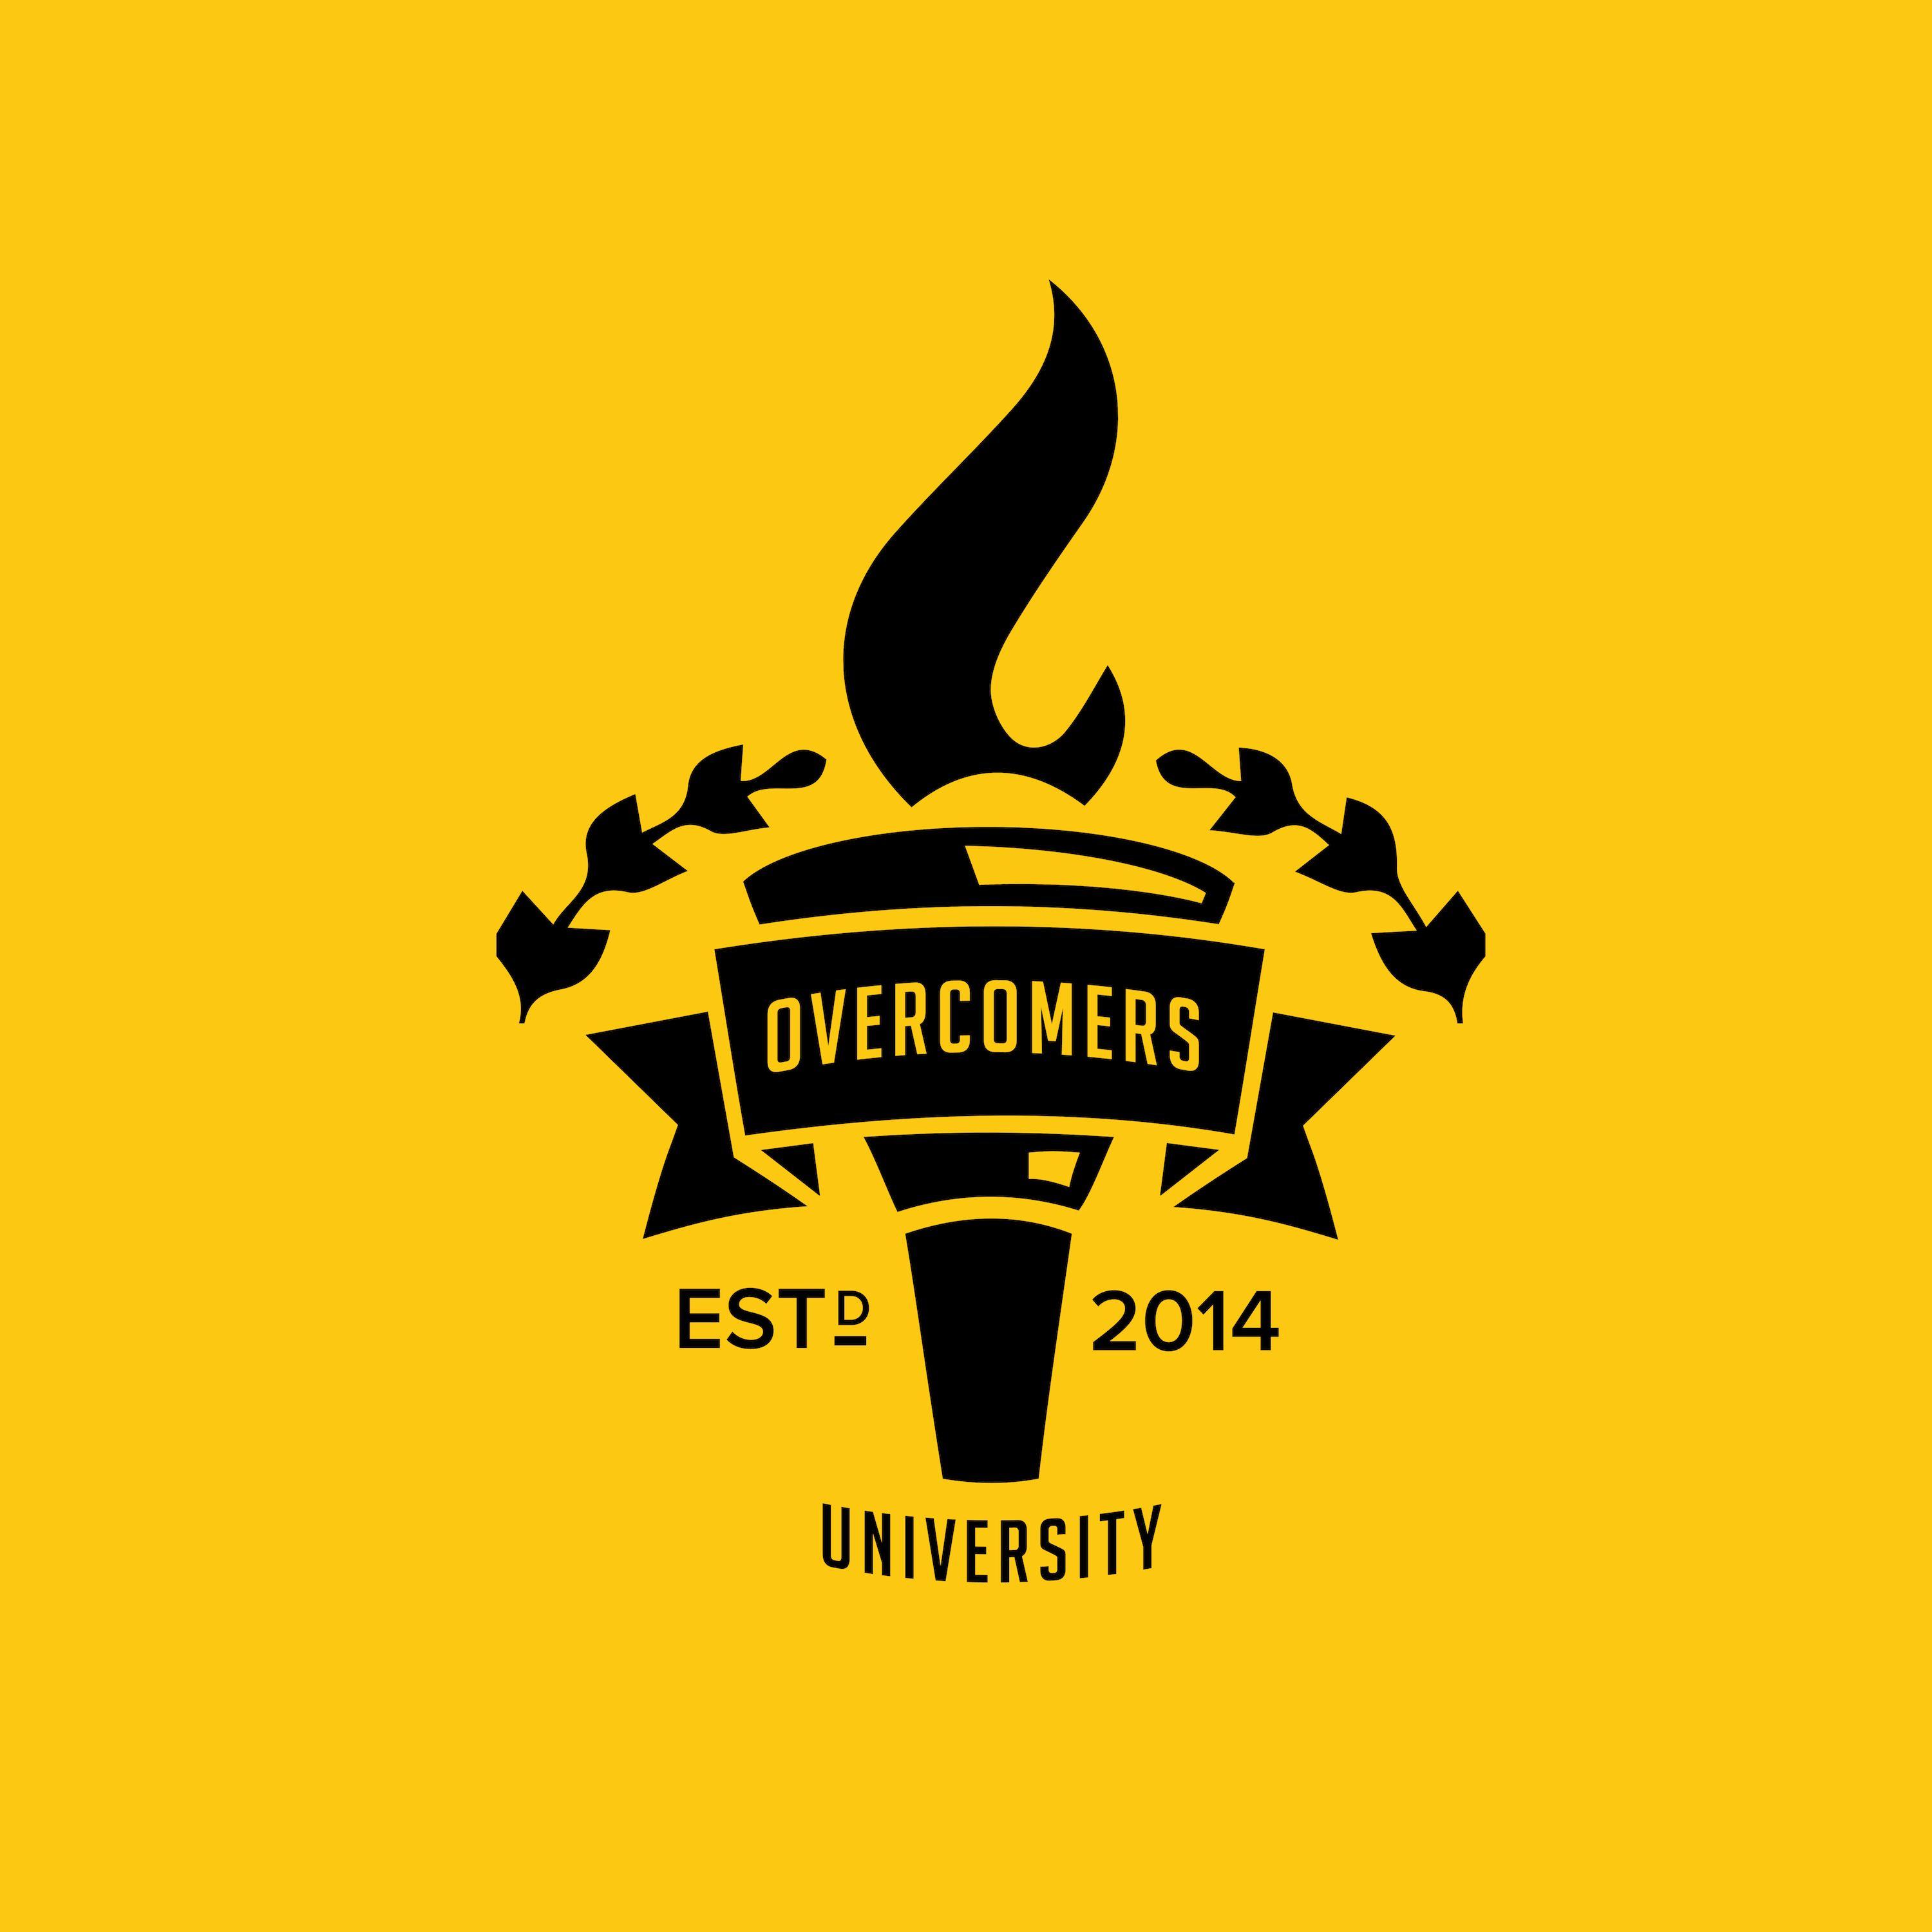 Overcomers Logo - Overcomer's University